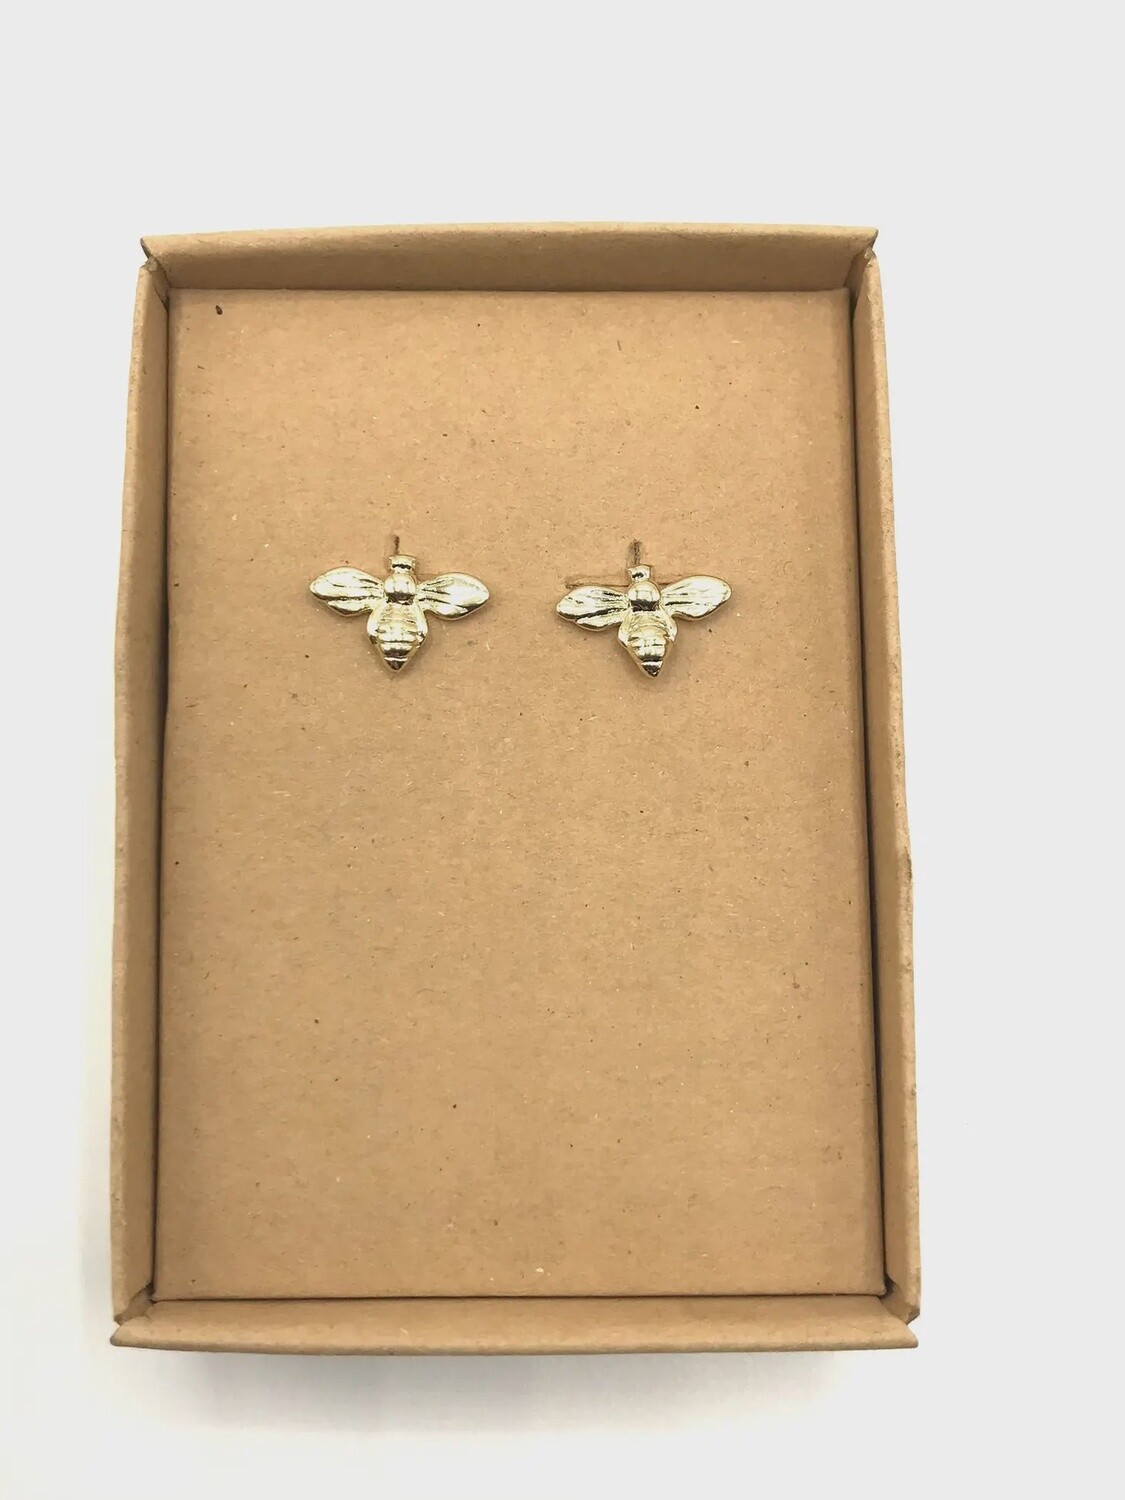 Tiny Bee Earrings